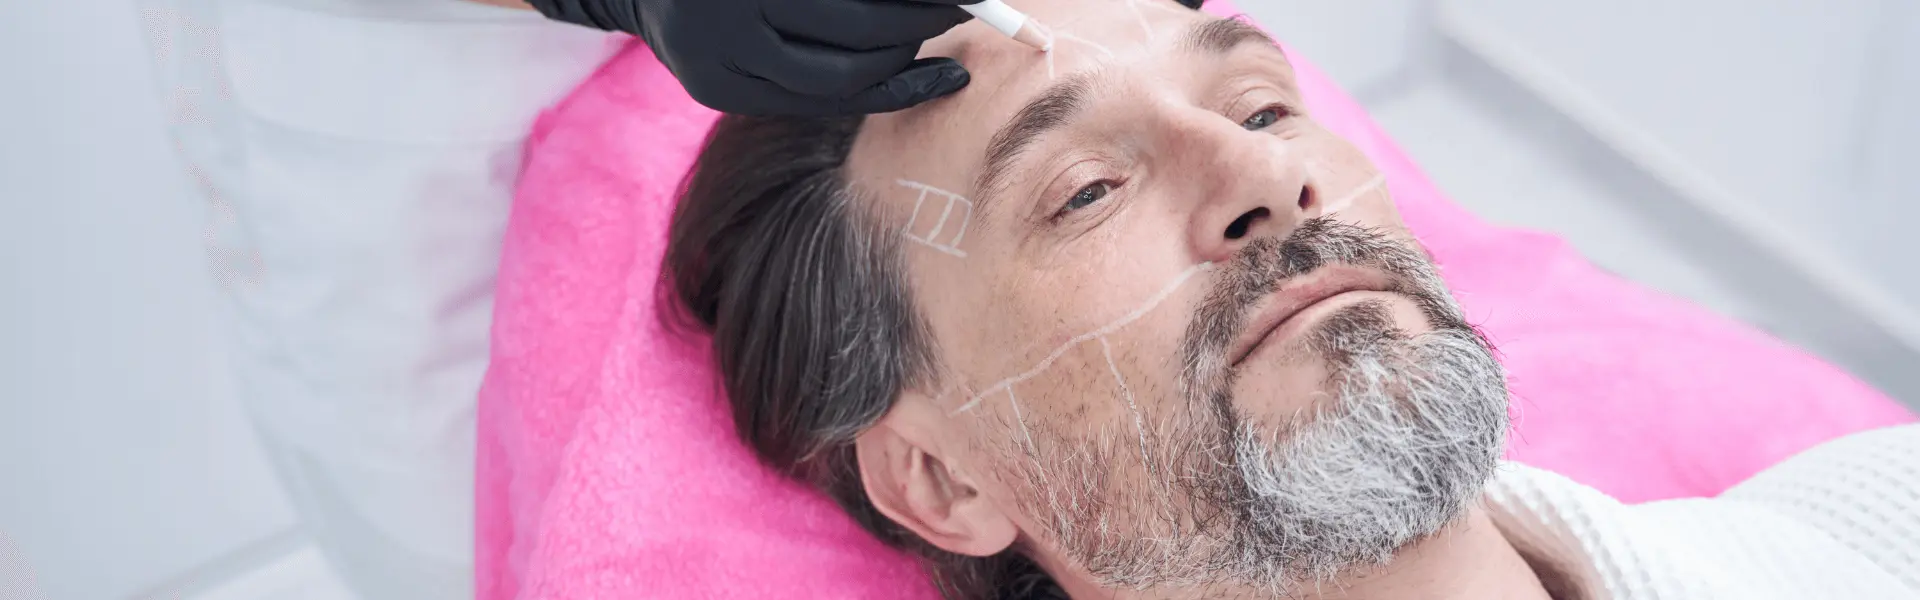 A man with a beard getting a facial treatment.